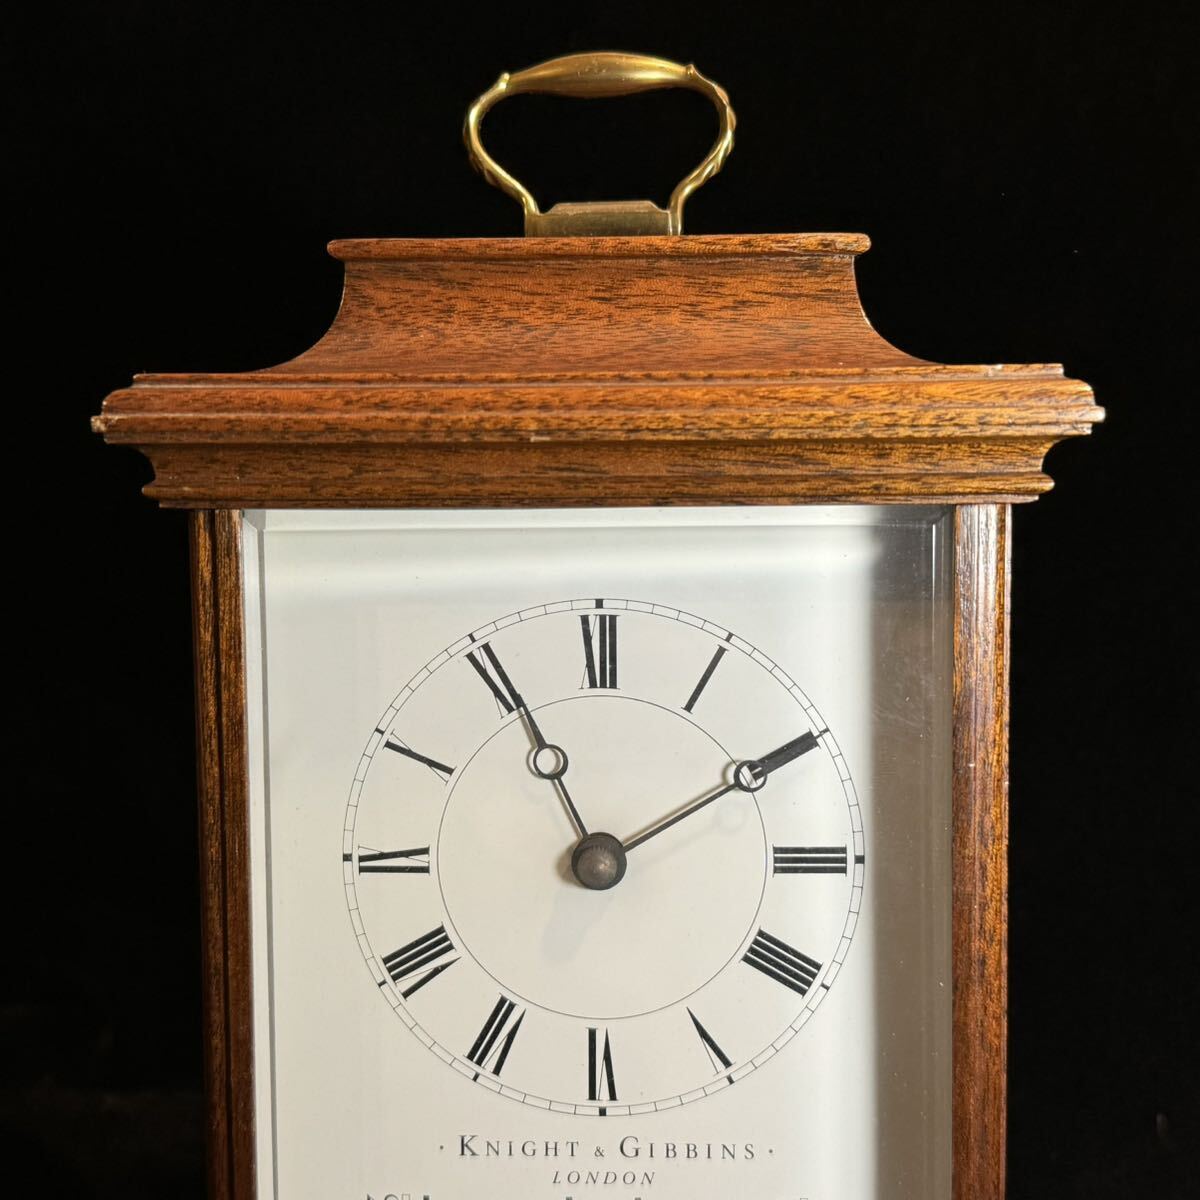 KNIGHT&GIBBINS LONDON 置時計 木製 面取りガラス クオーツ Made in England アンティーク ヴィンテージ 置き時計 ムーンフェイズ_画像6